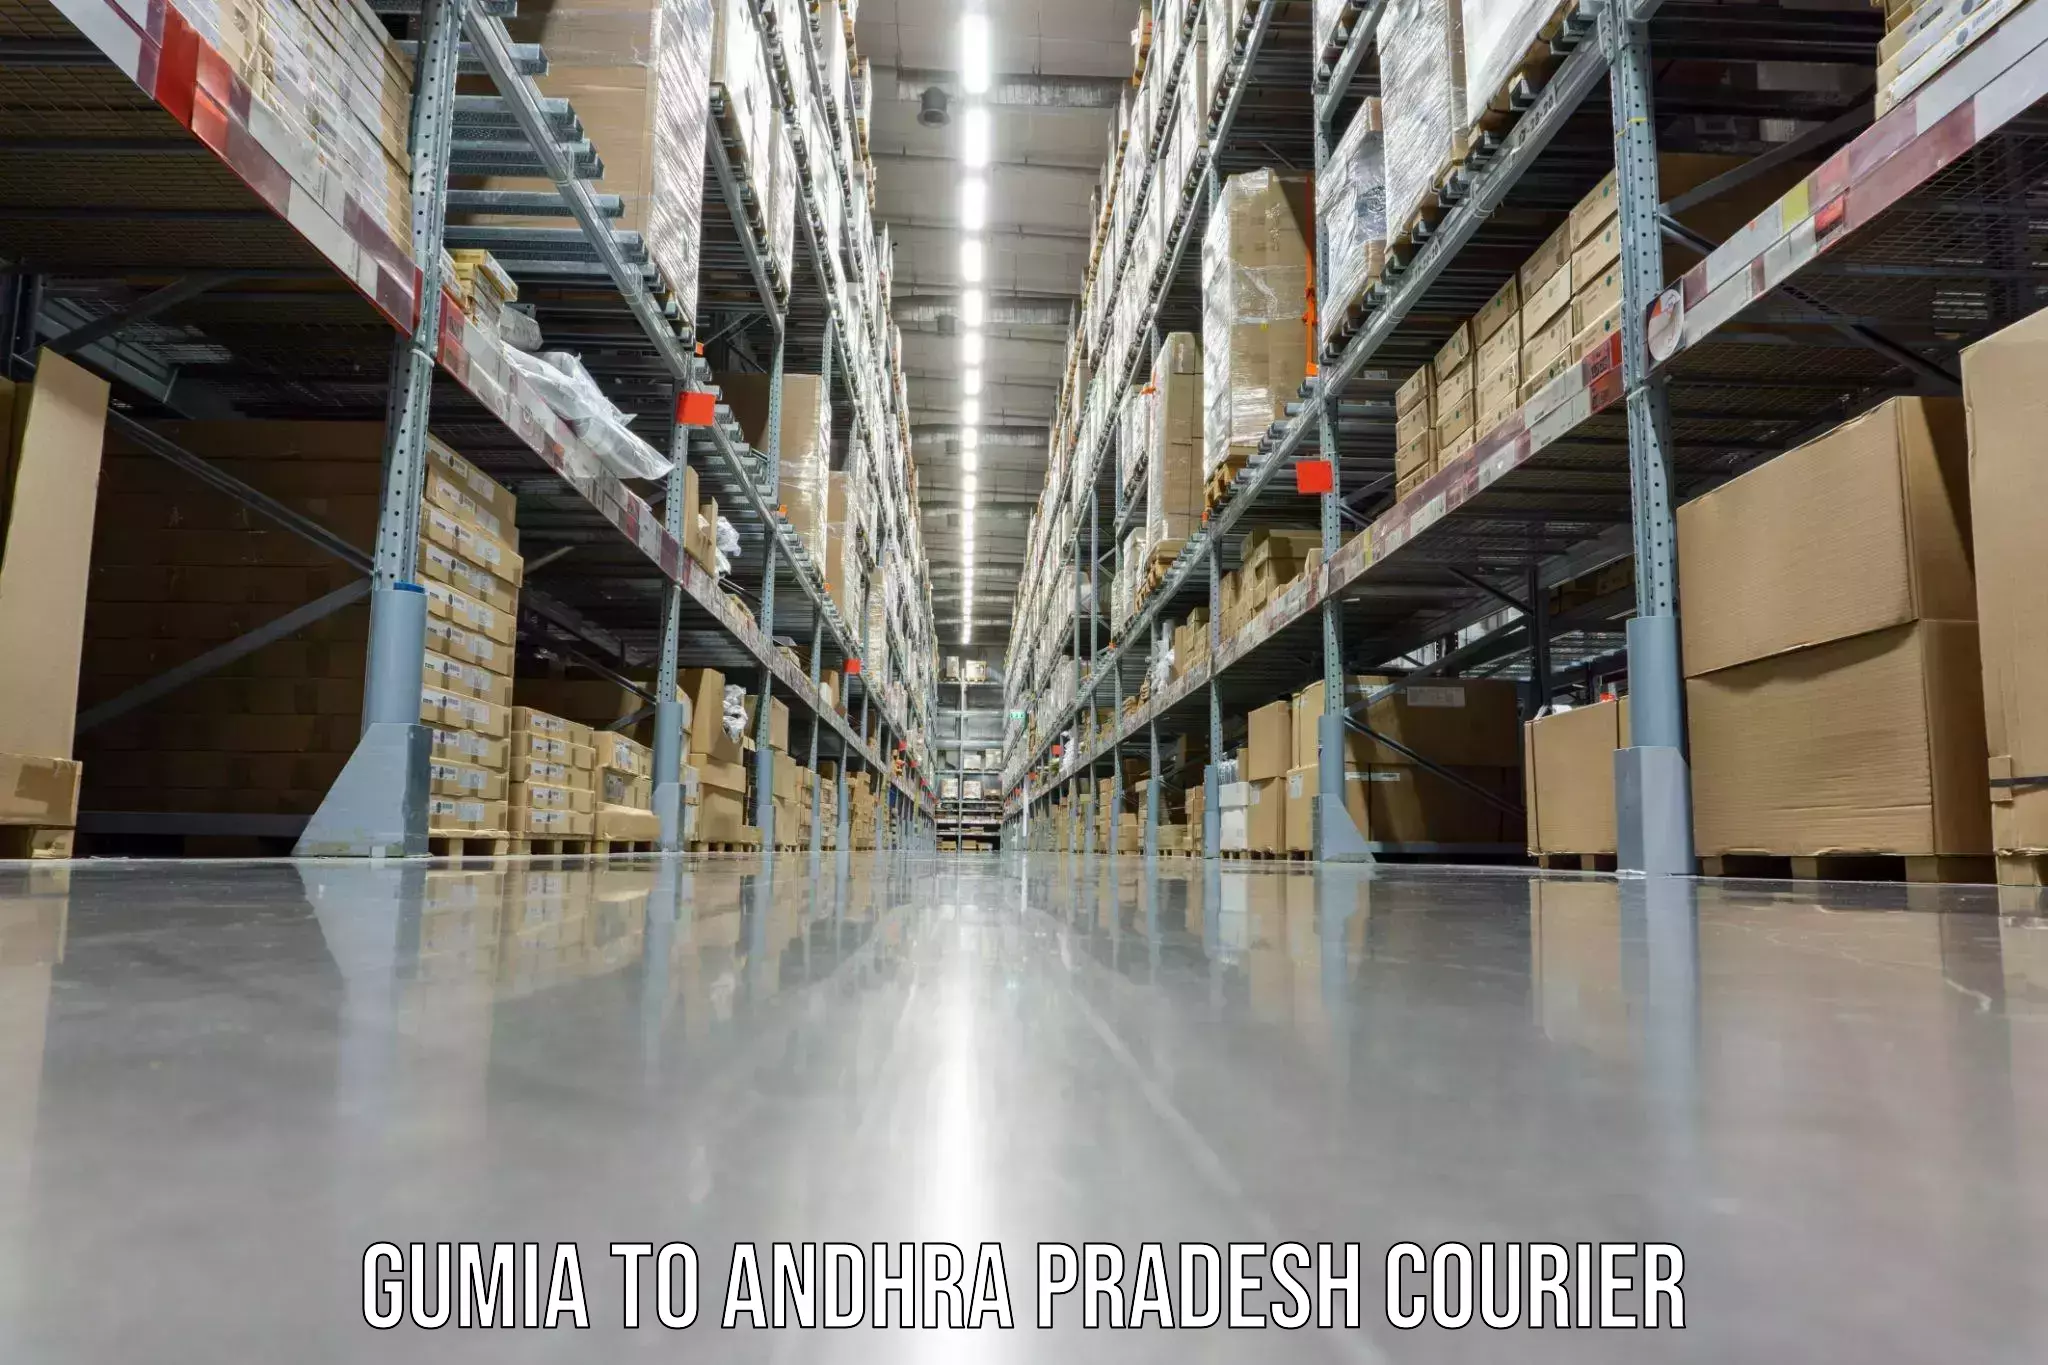 Professional moving company Gumia to Velgodu